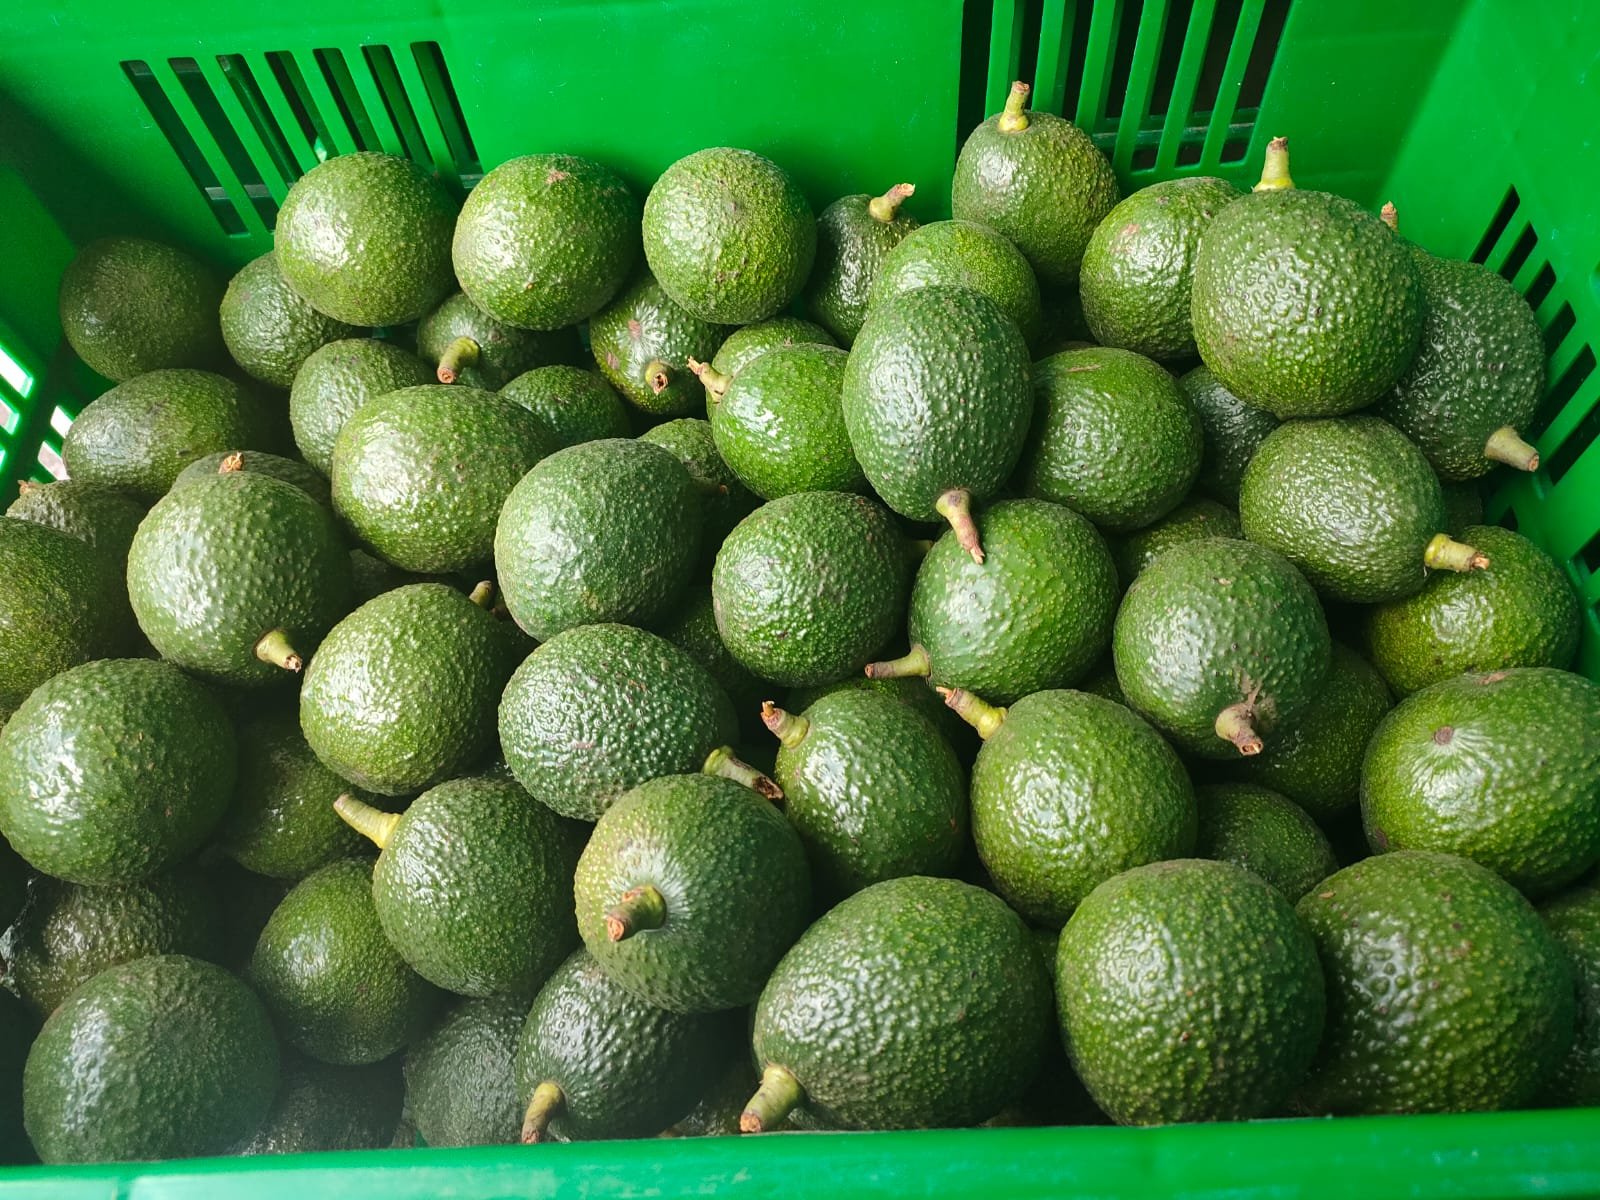 issacco fresh, fresh avocadoes